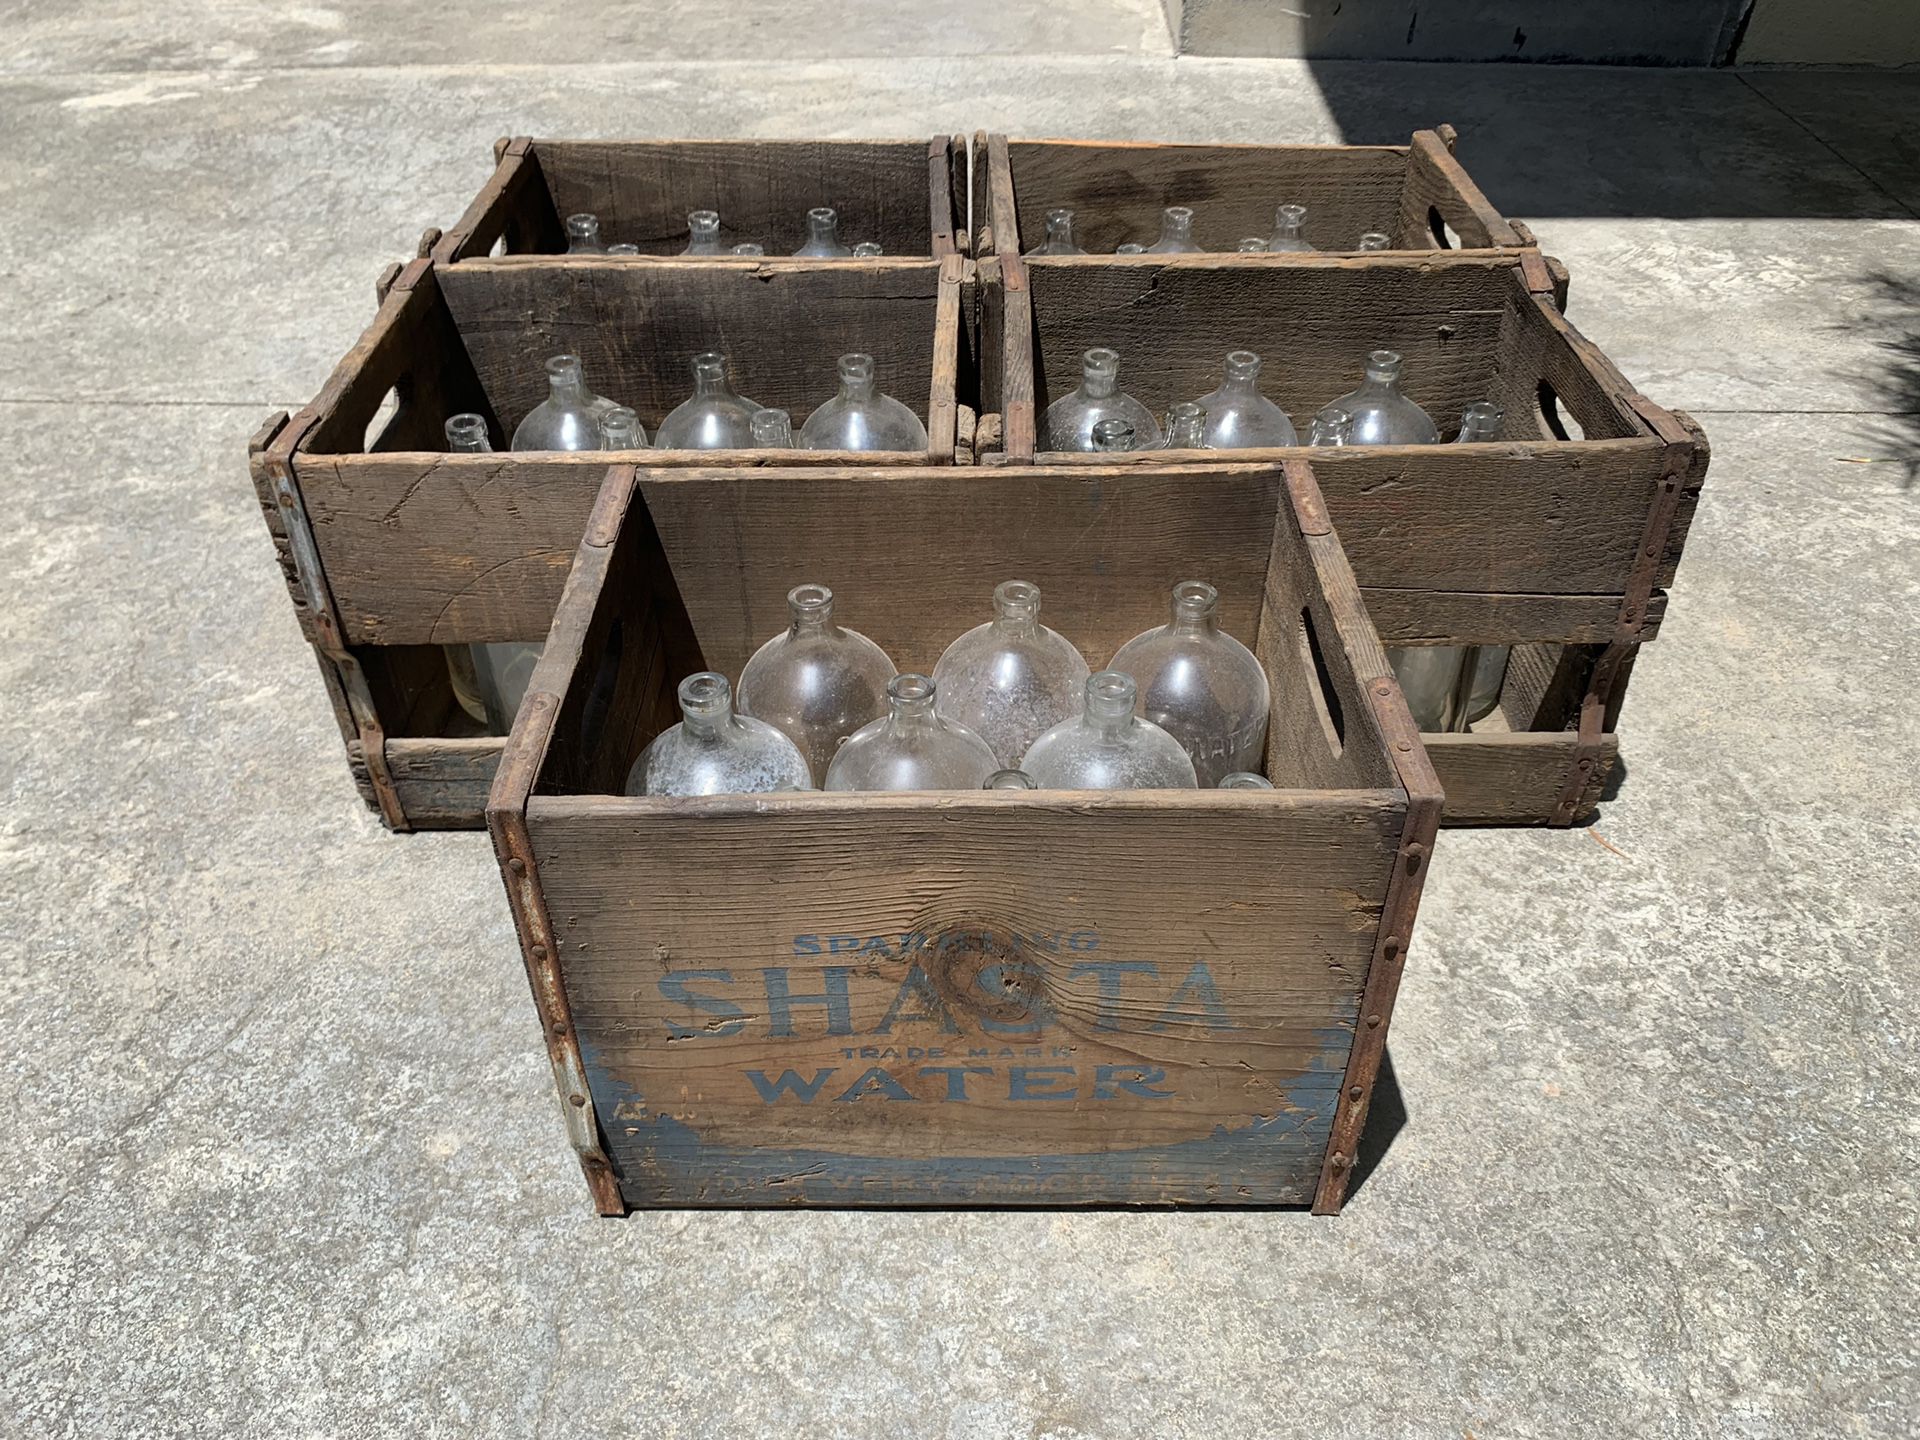 100 year old original Shasta Water Company antique glass bottles in original vintage wooden crates